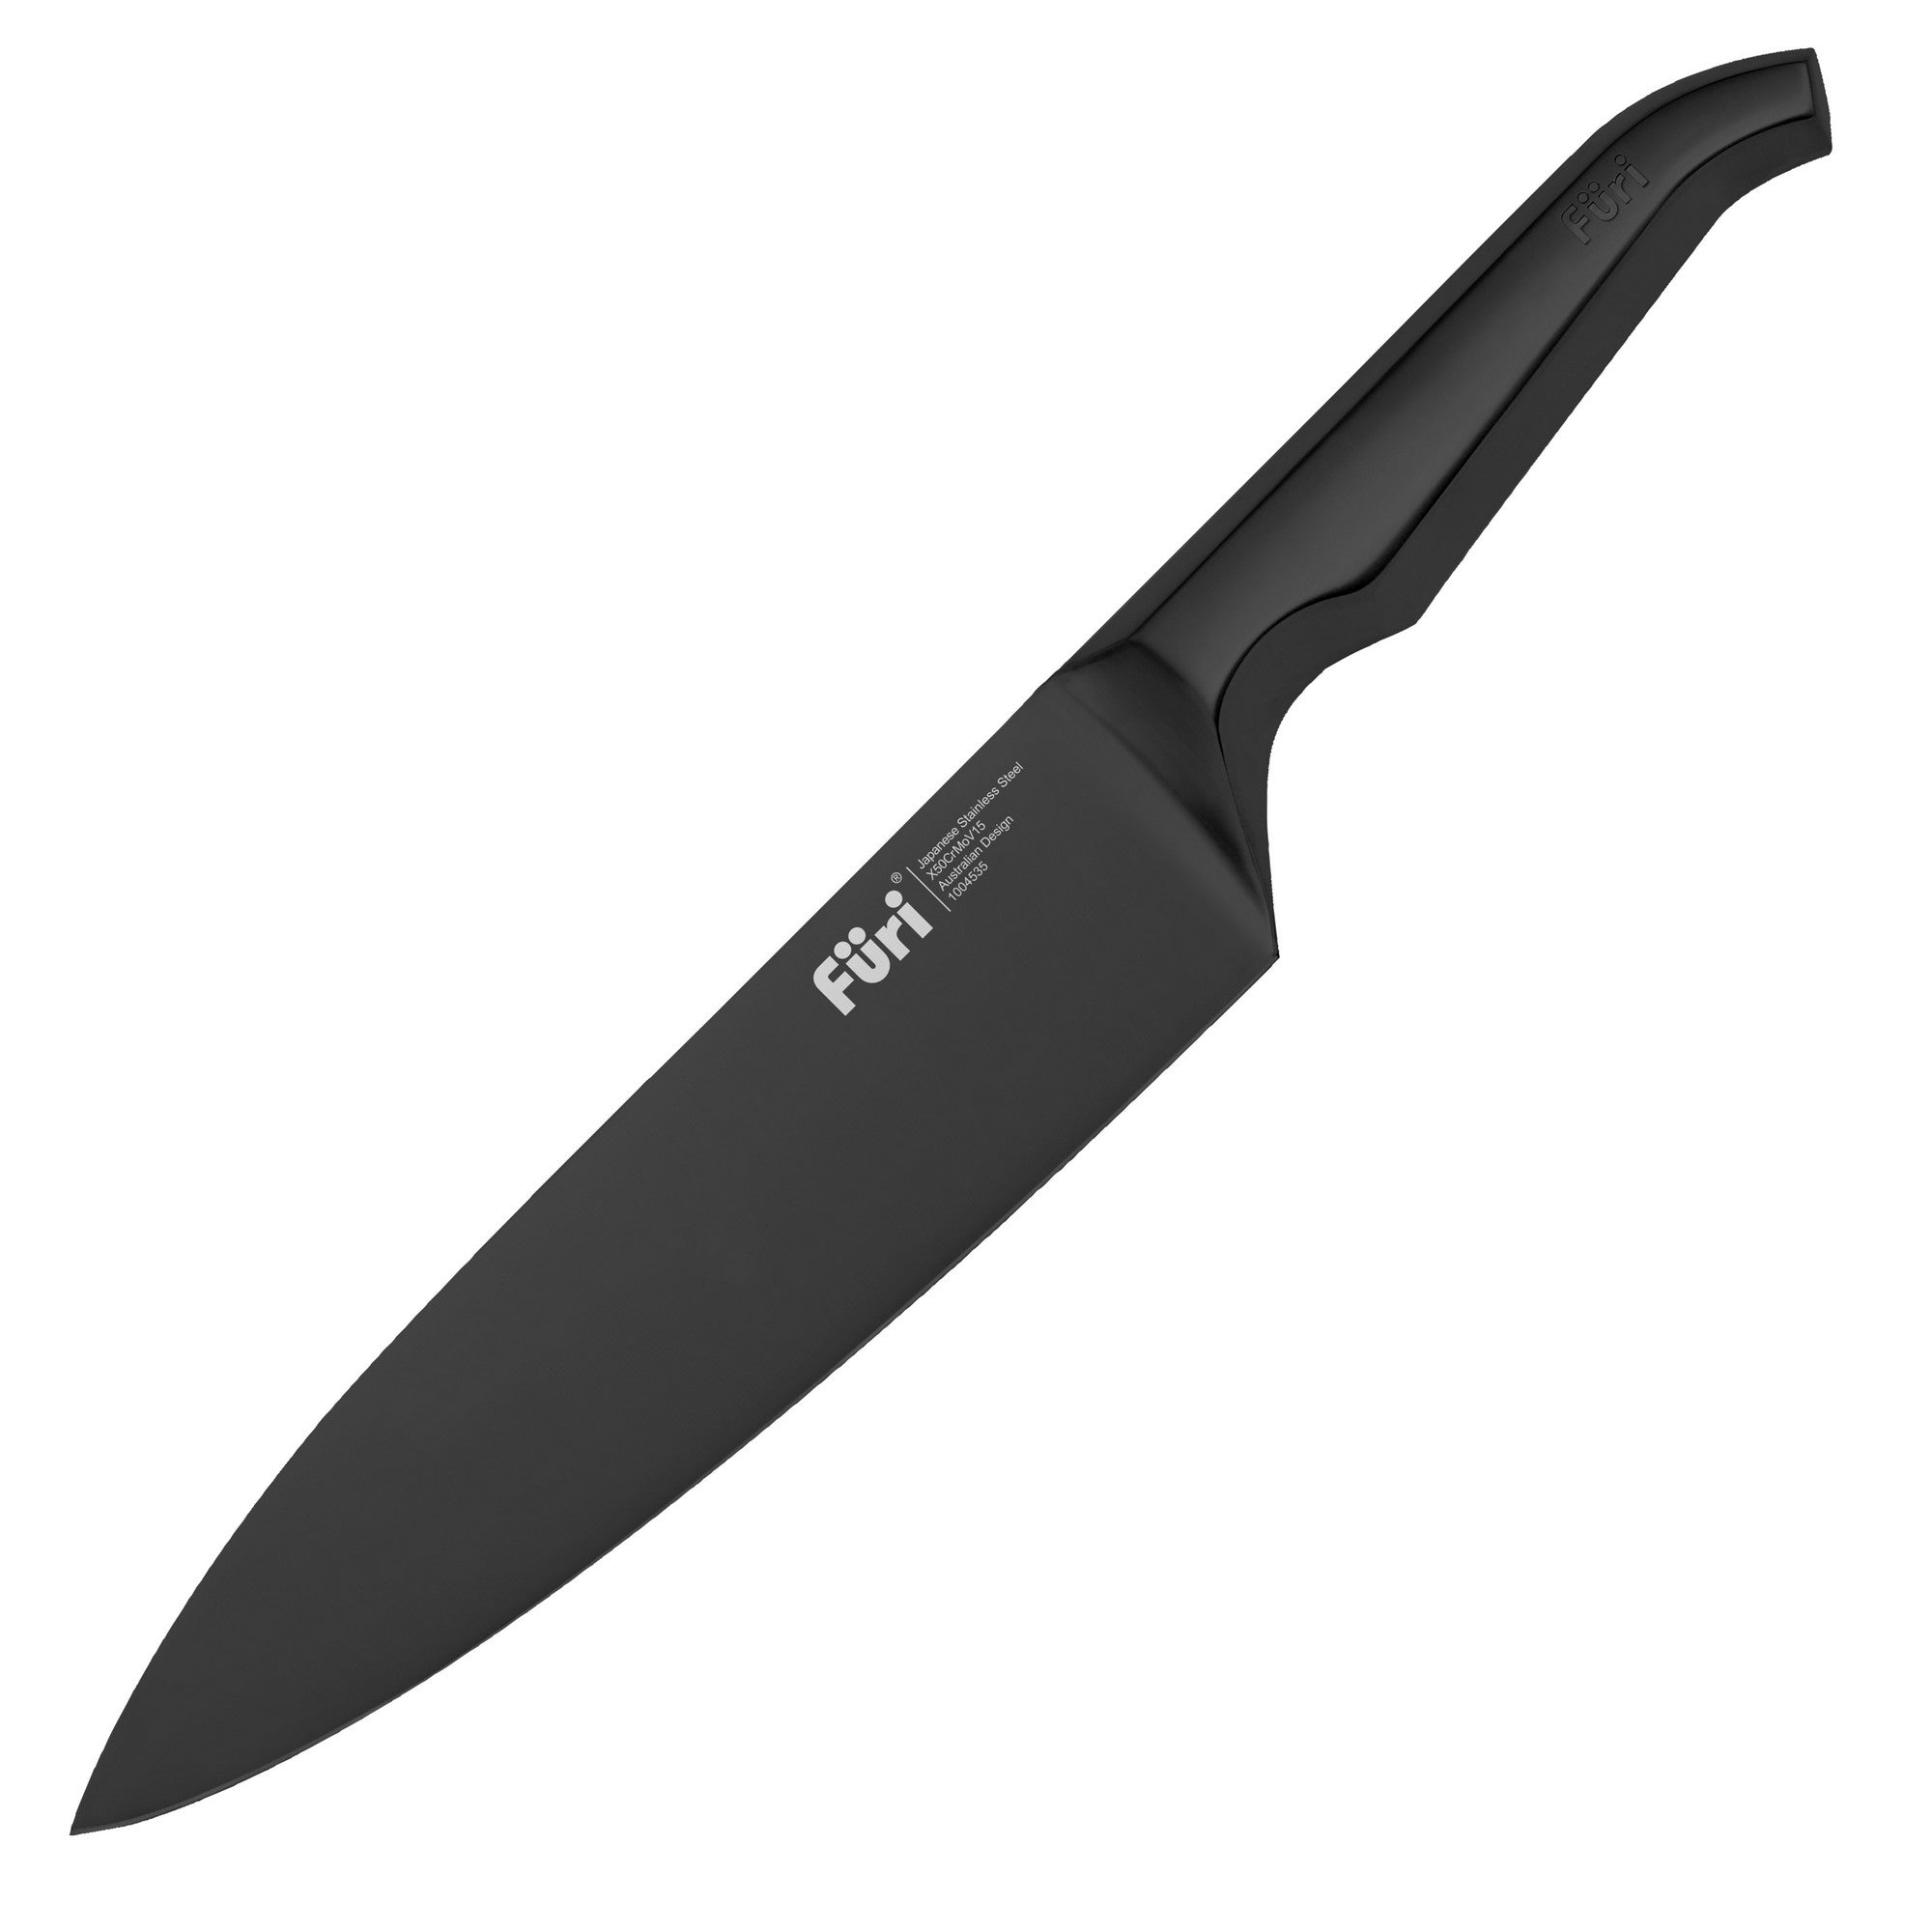 Furi Pro Jet Black Cook's Knife 20cm